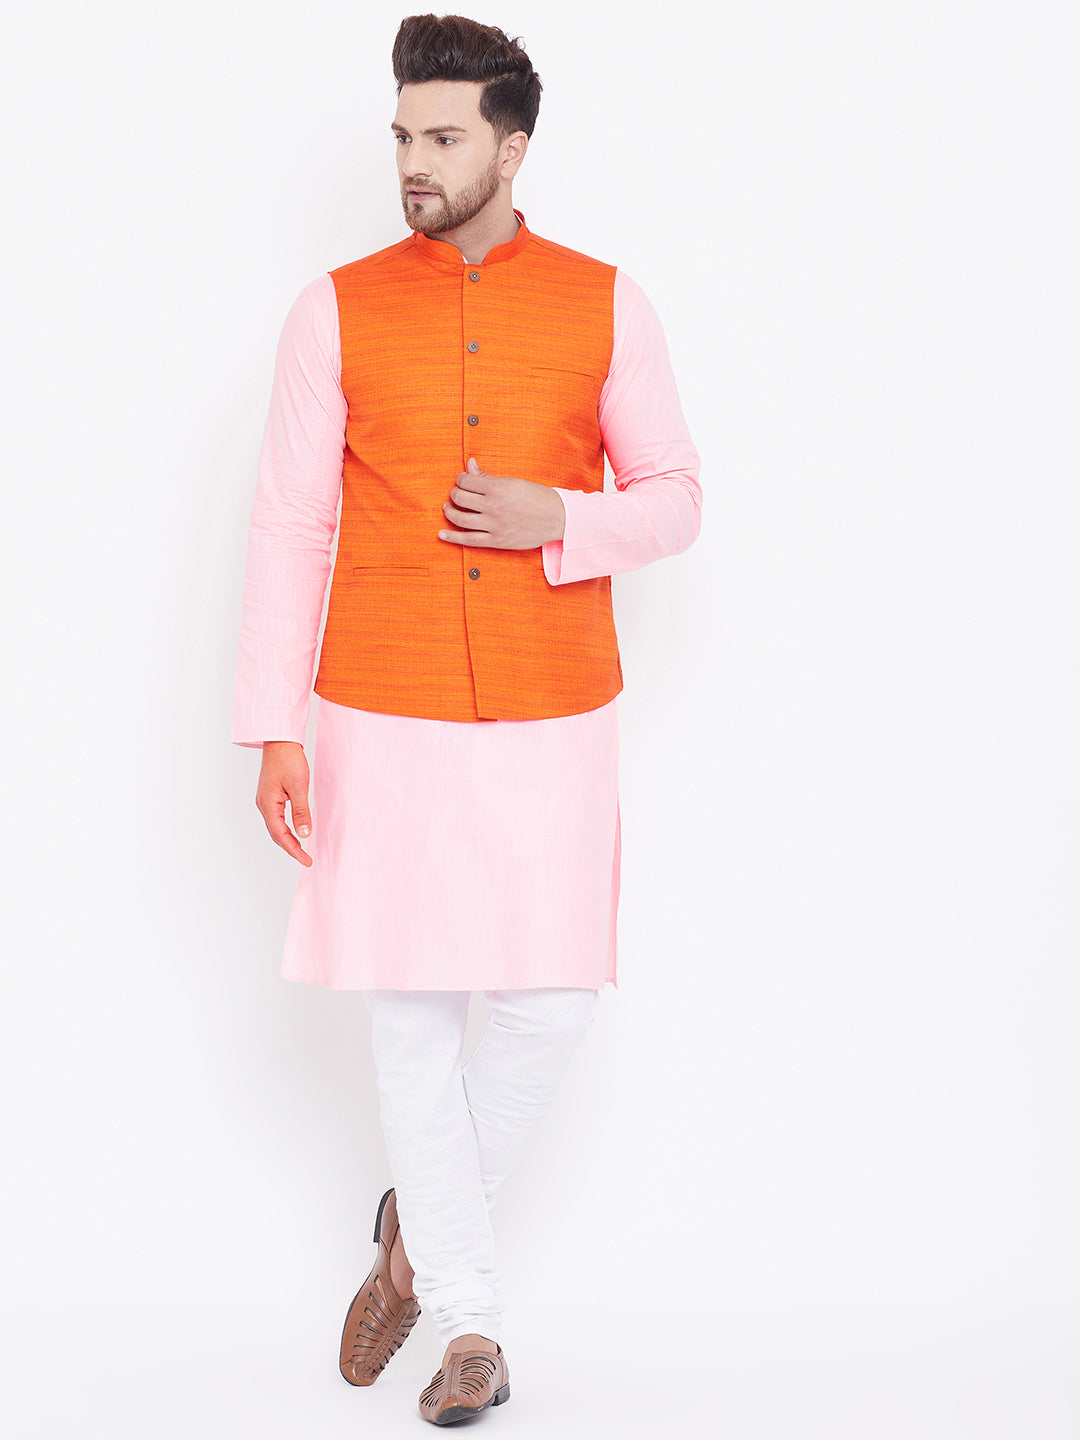 Grey Short Jacket With Kurta And Trouser | Indian wedding clothes for men, Short  jacket, India fashion men